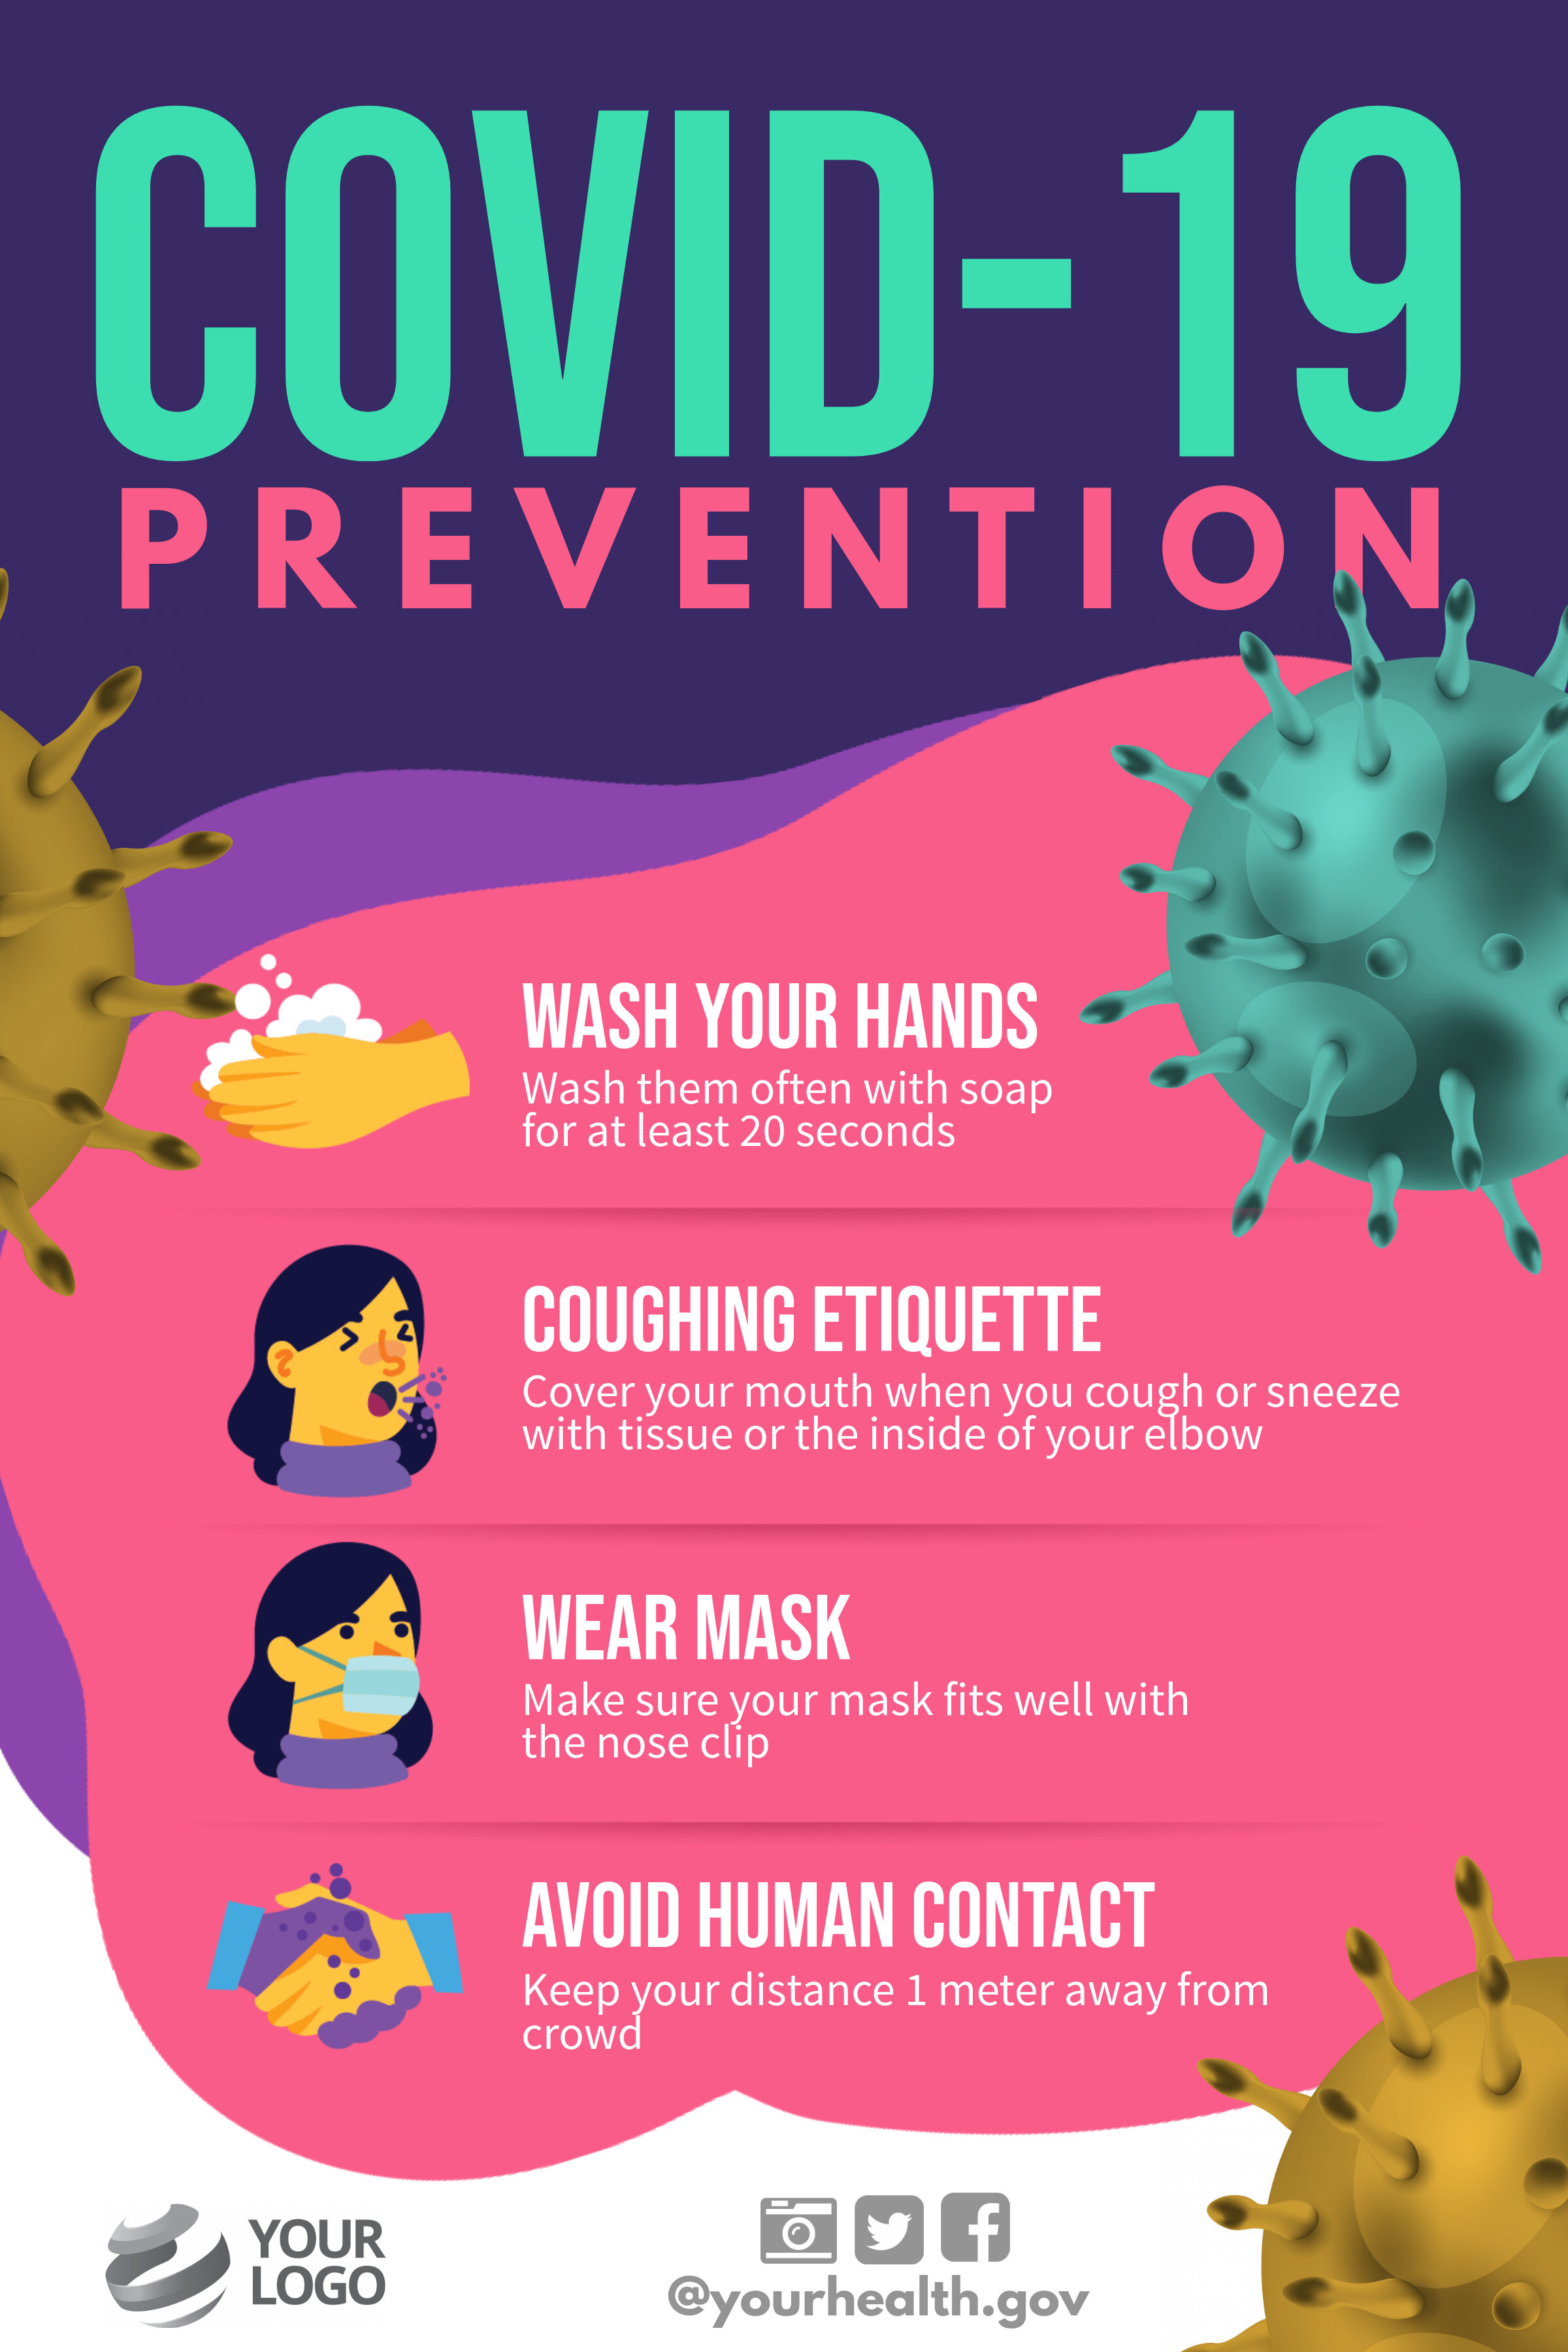 Copy of Covid-19 Corona Virus Prevention Poster.jpg